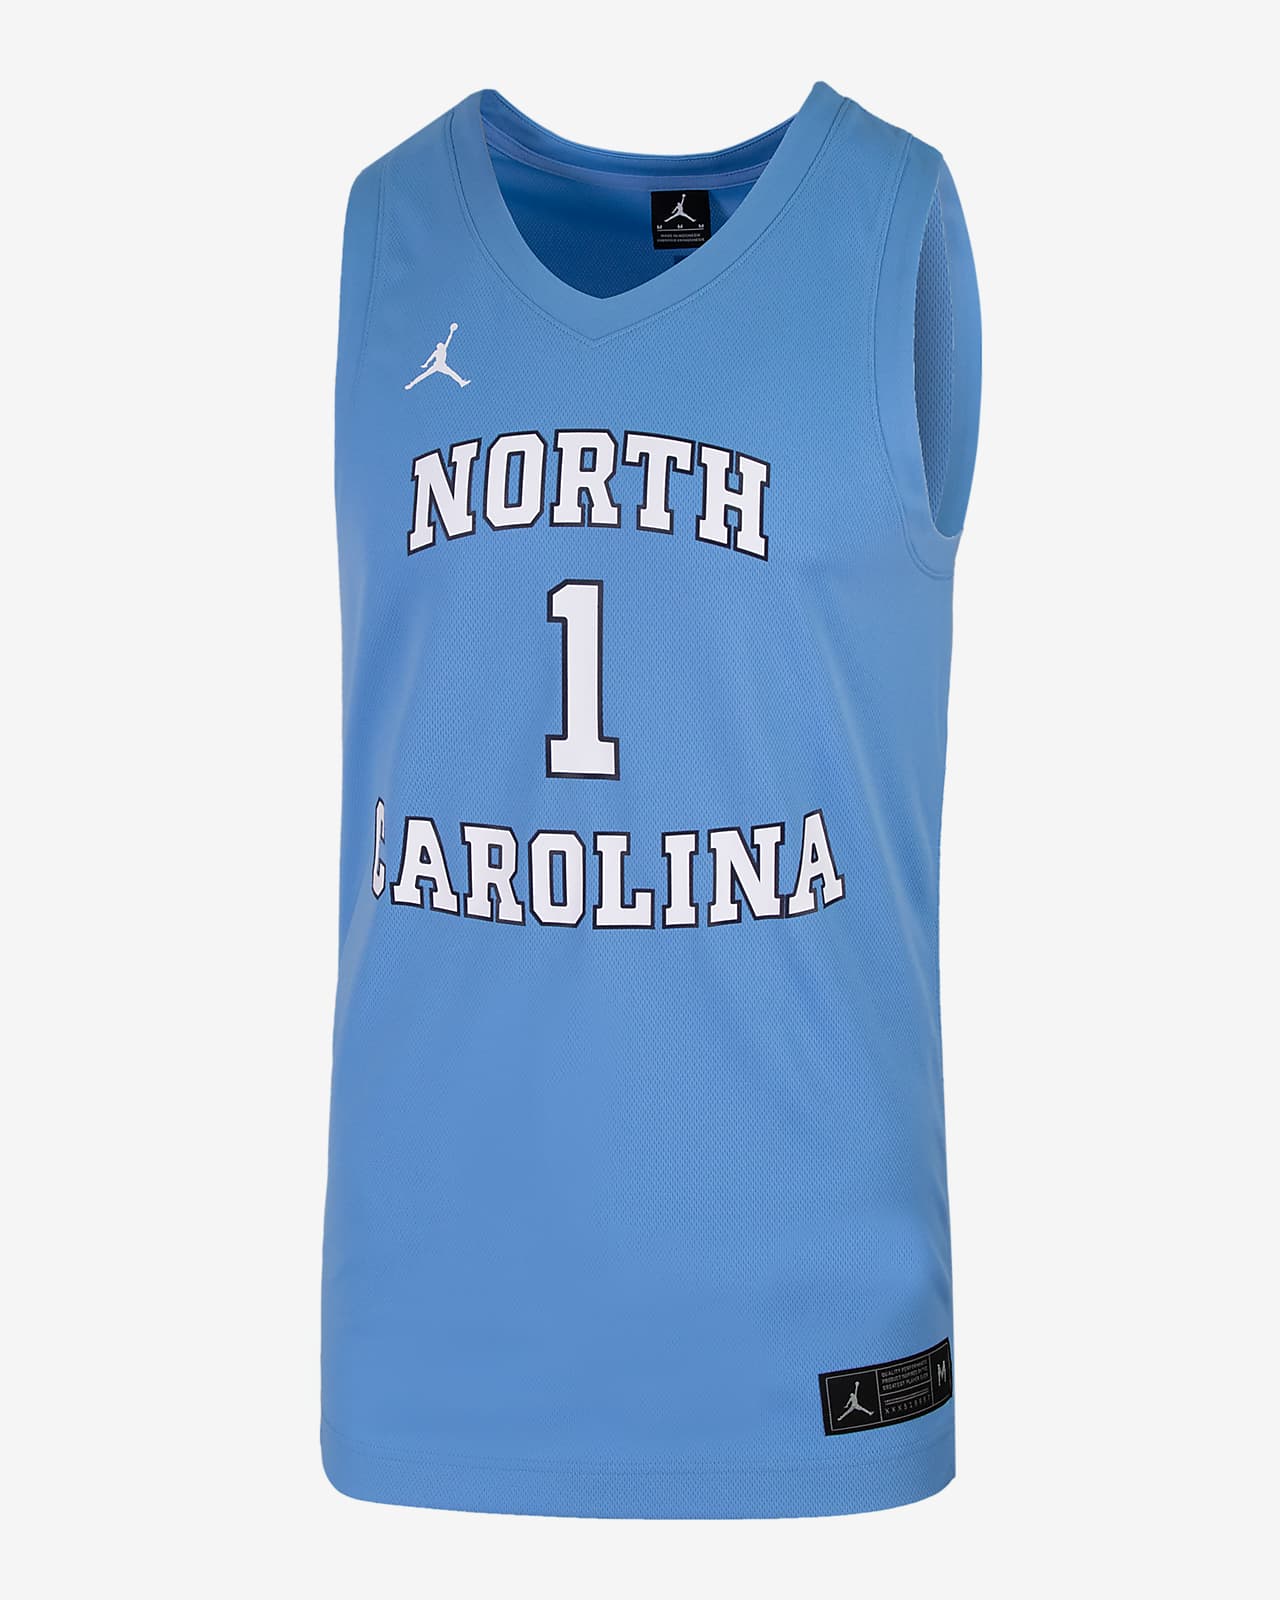 Nike College Replica (UNC) Basketball Jersey